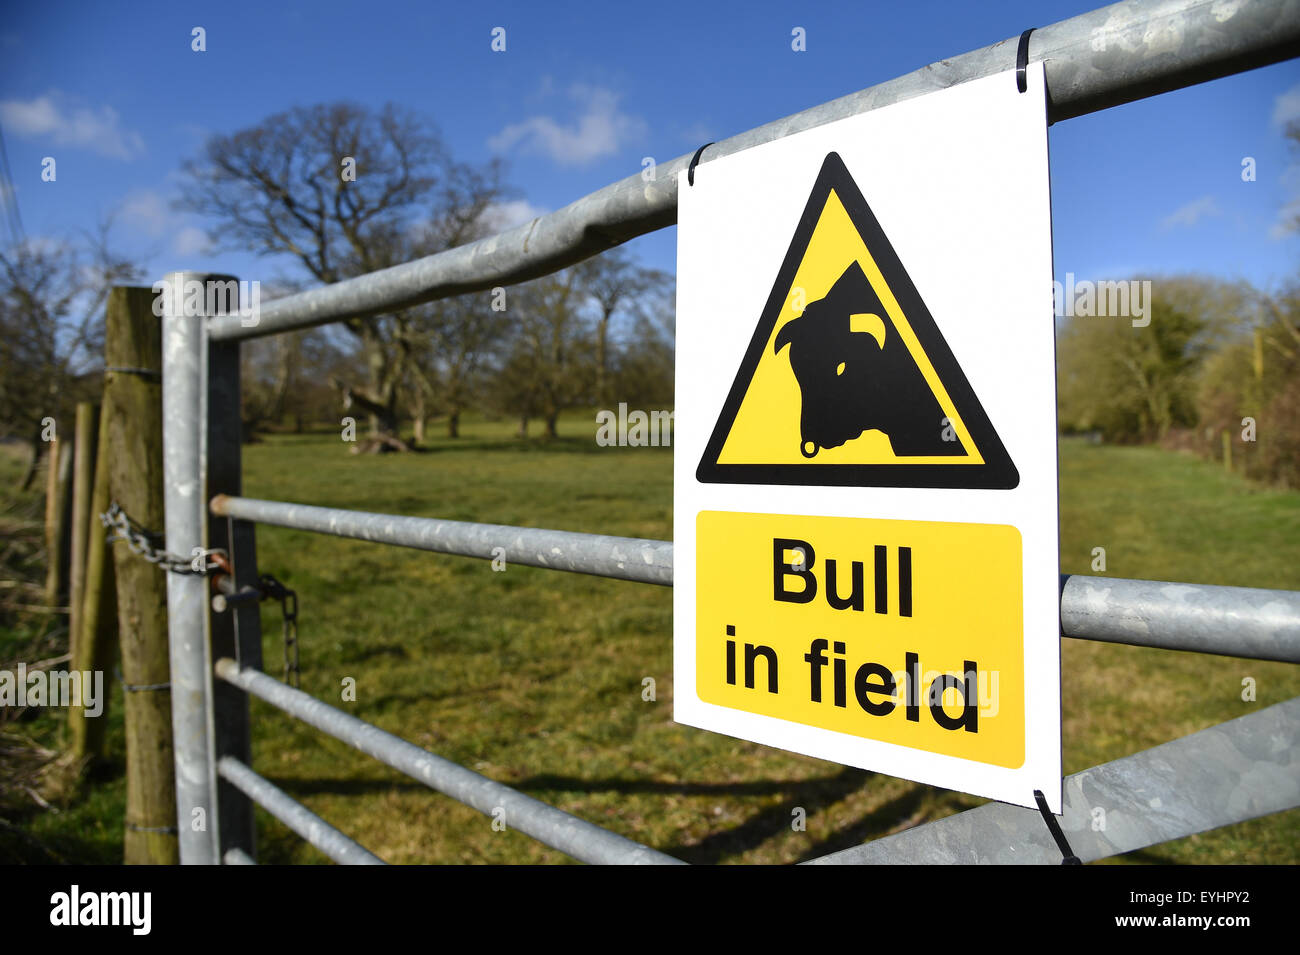 Bull in field warning sign, Britain, UK Stock Photo